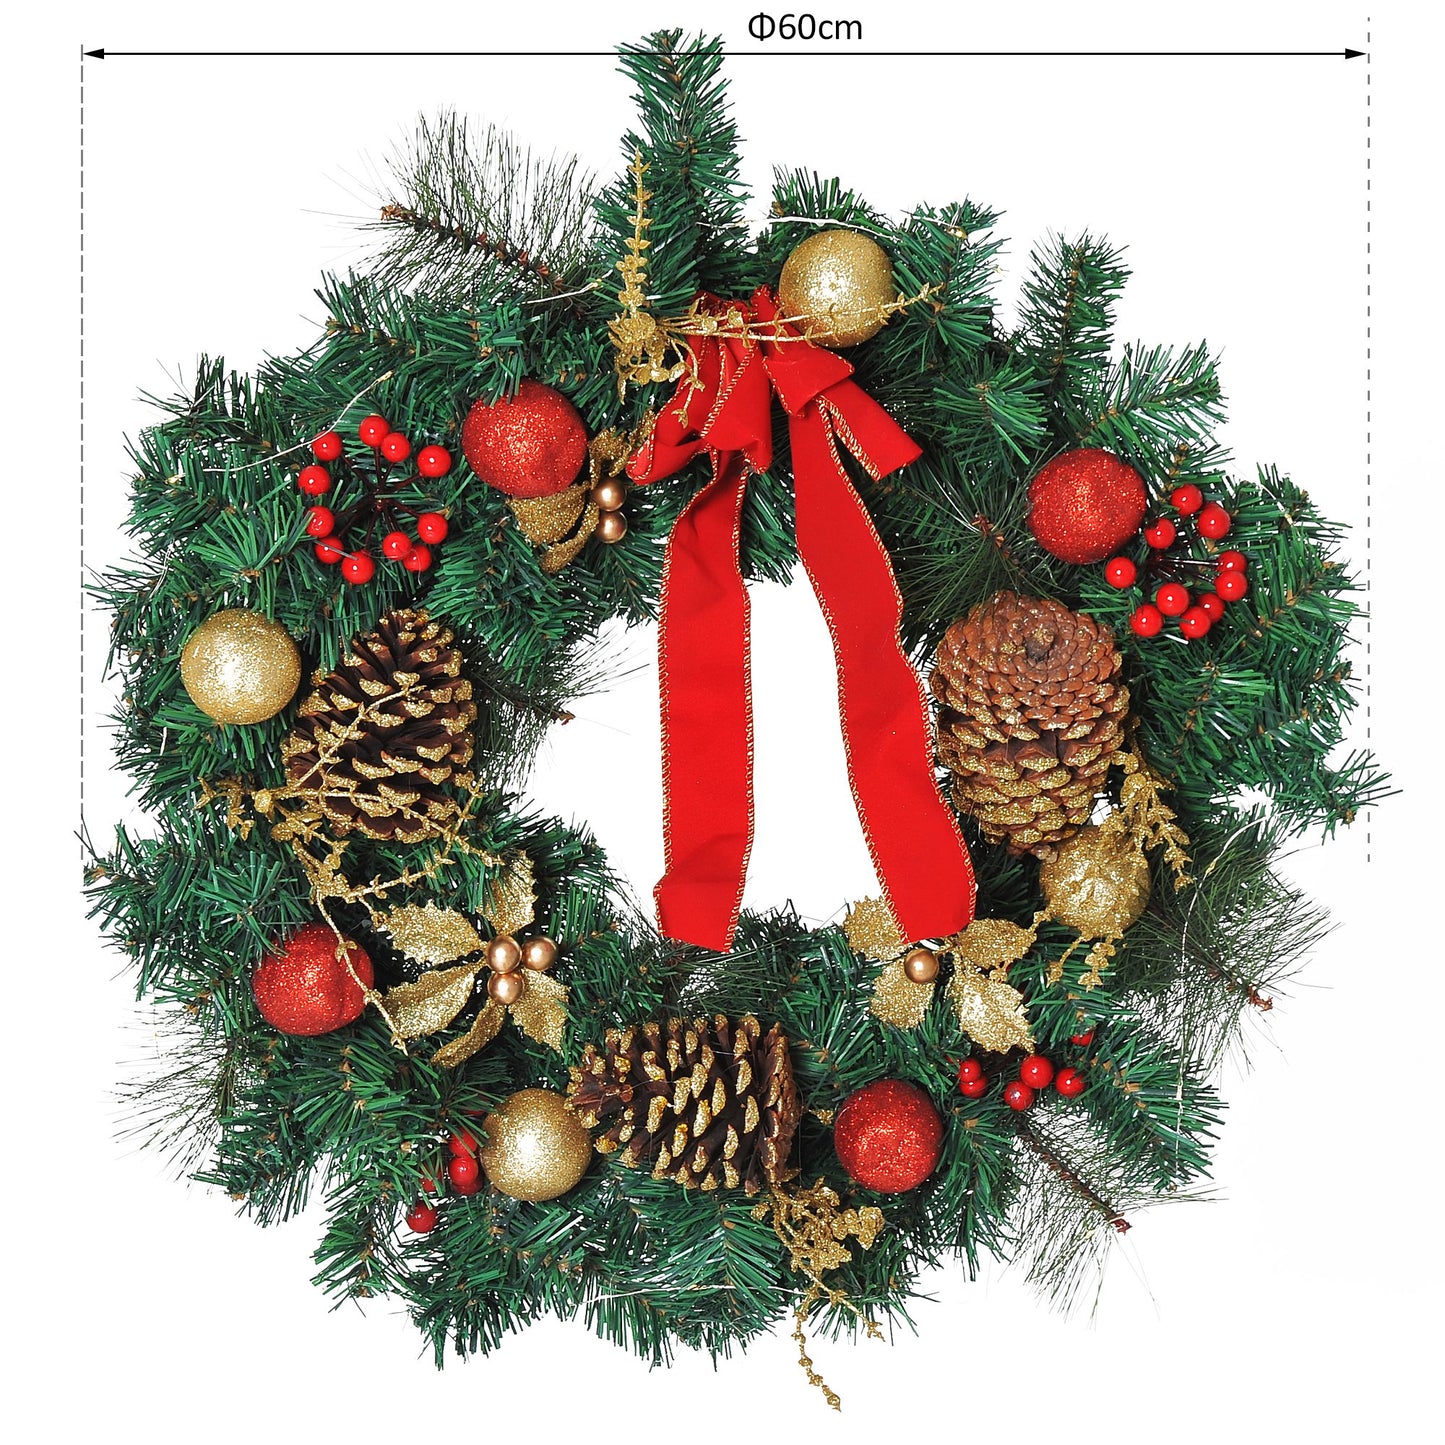 HOMCOM Pre-Lit Artificial Christmas Door Wreath, 60 cm Diameter